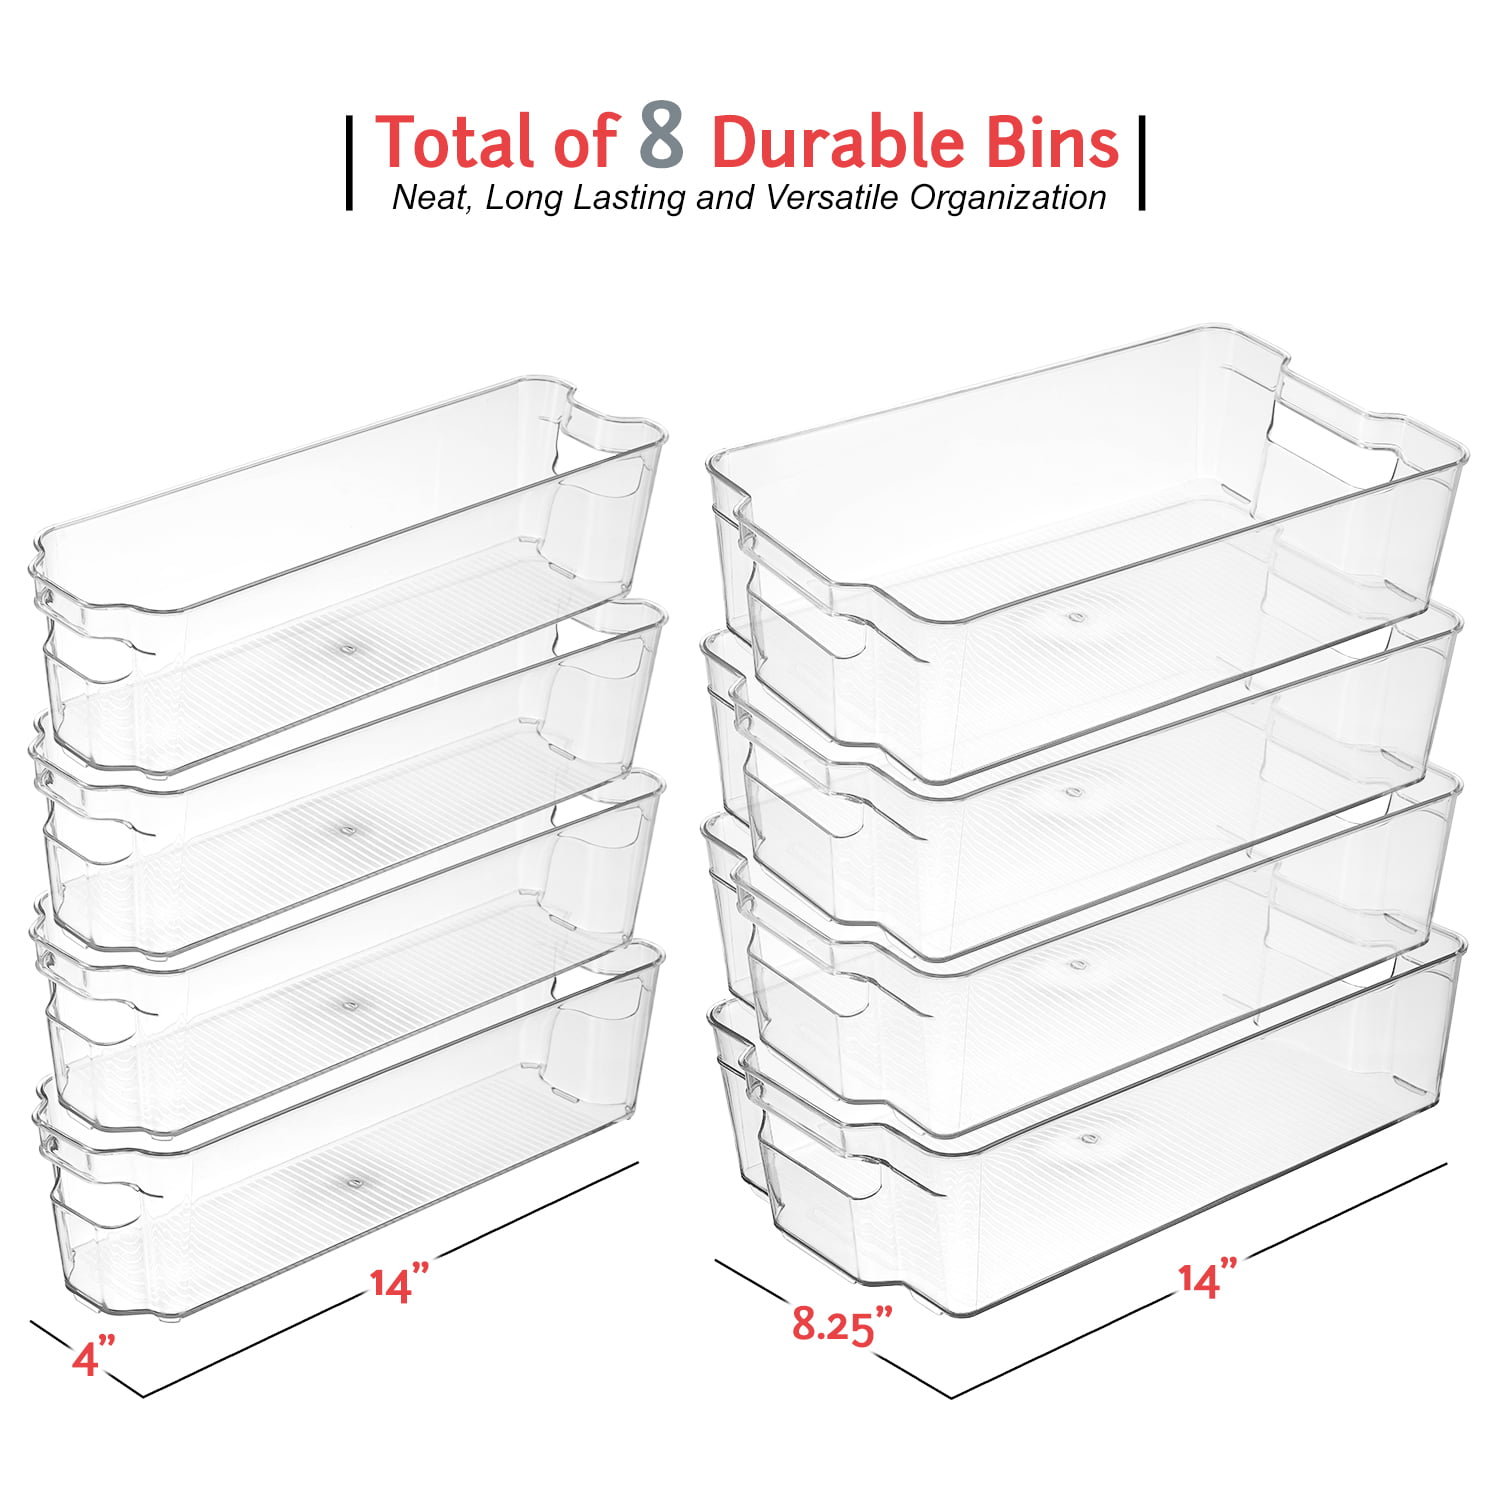 StorageMaid Stackable Storage Fridge Bins - Refrigerator Organizer Bins for  Fridge, Freezer, Pantry and Kitchen. Includes Bonus Magnetic Dry-Erase  Whiteboard & …